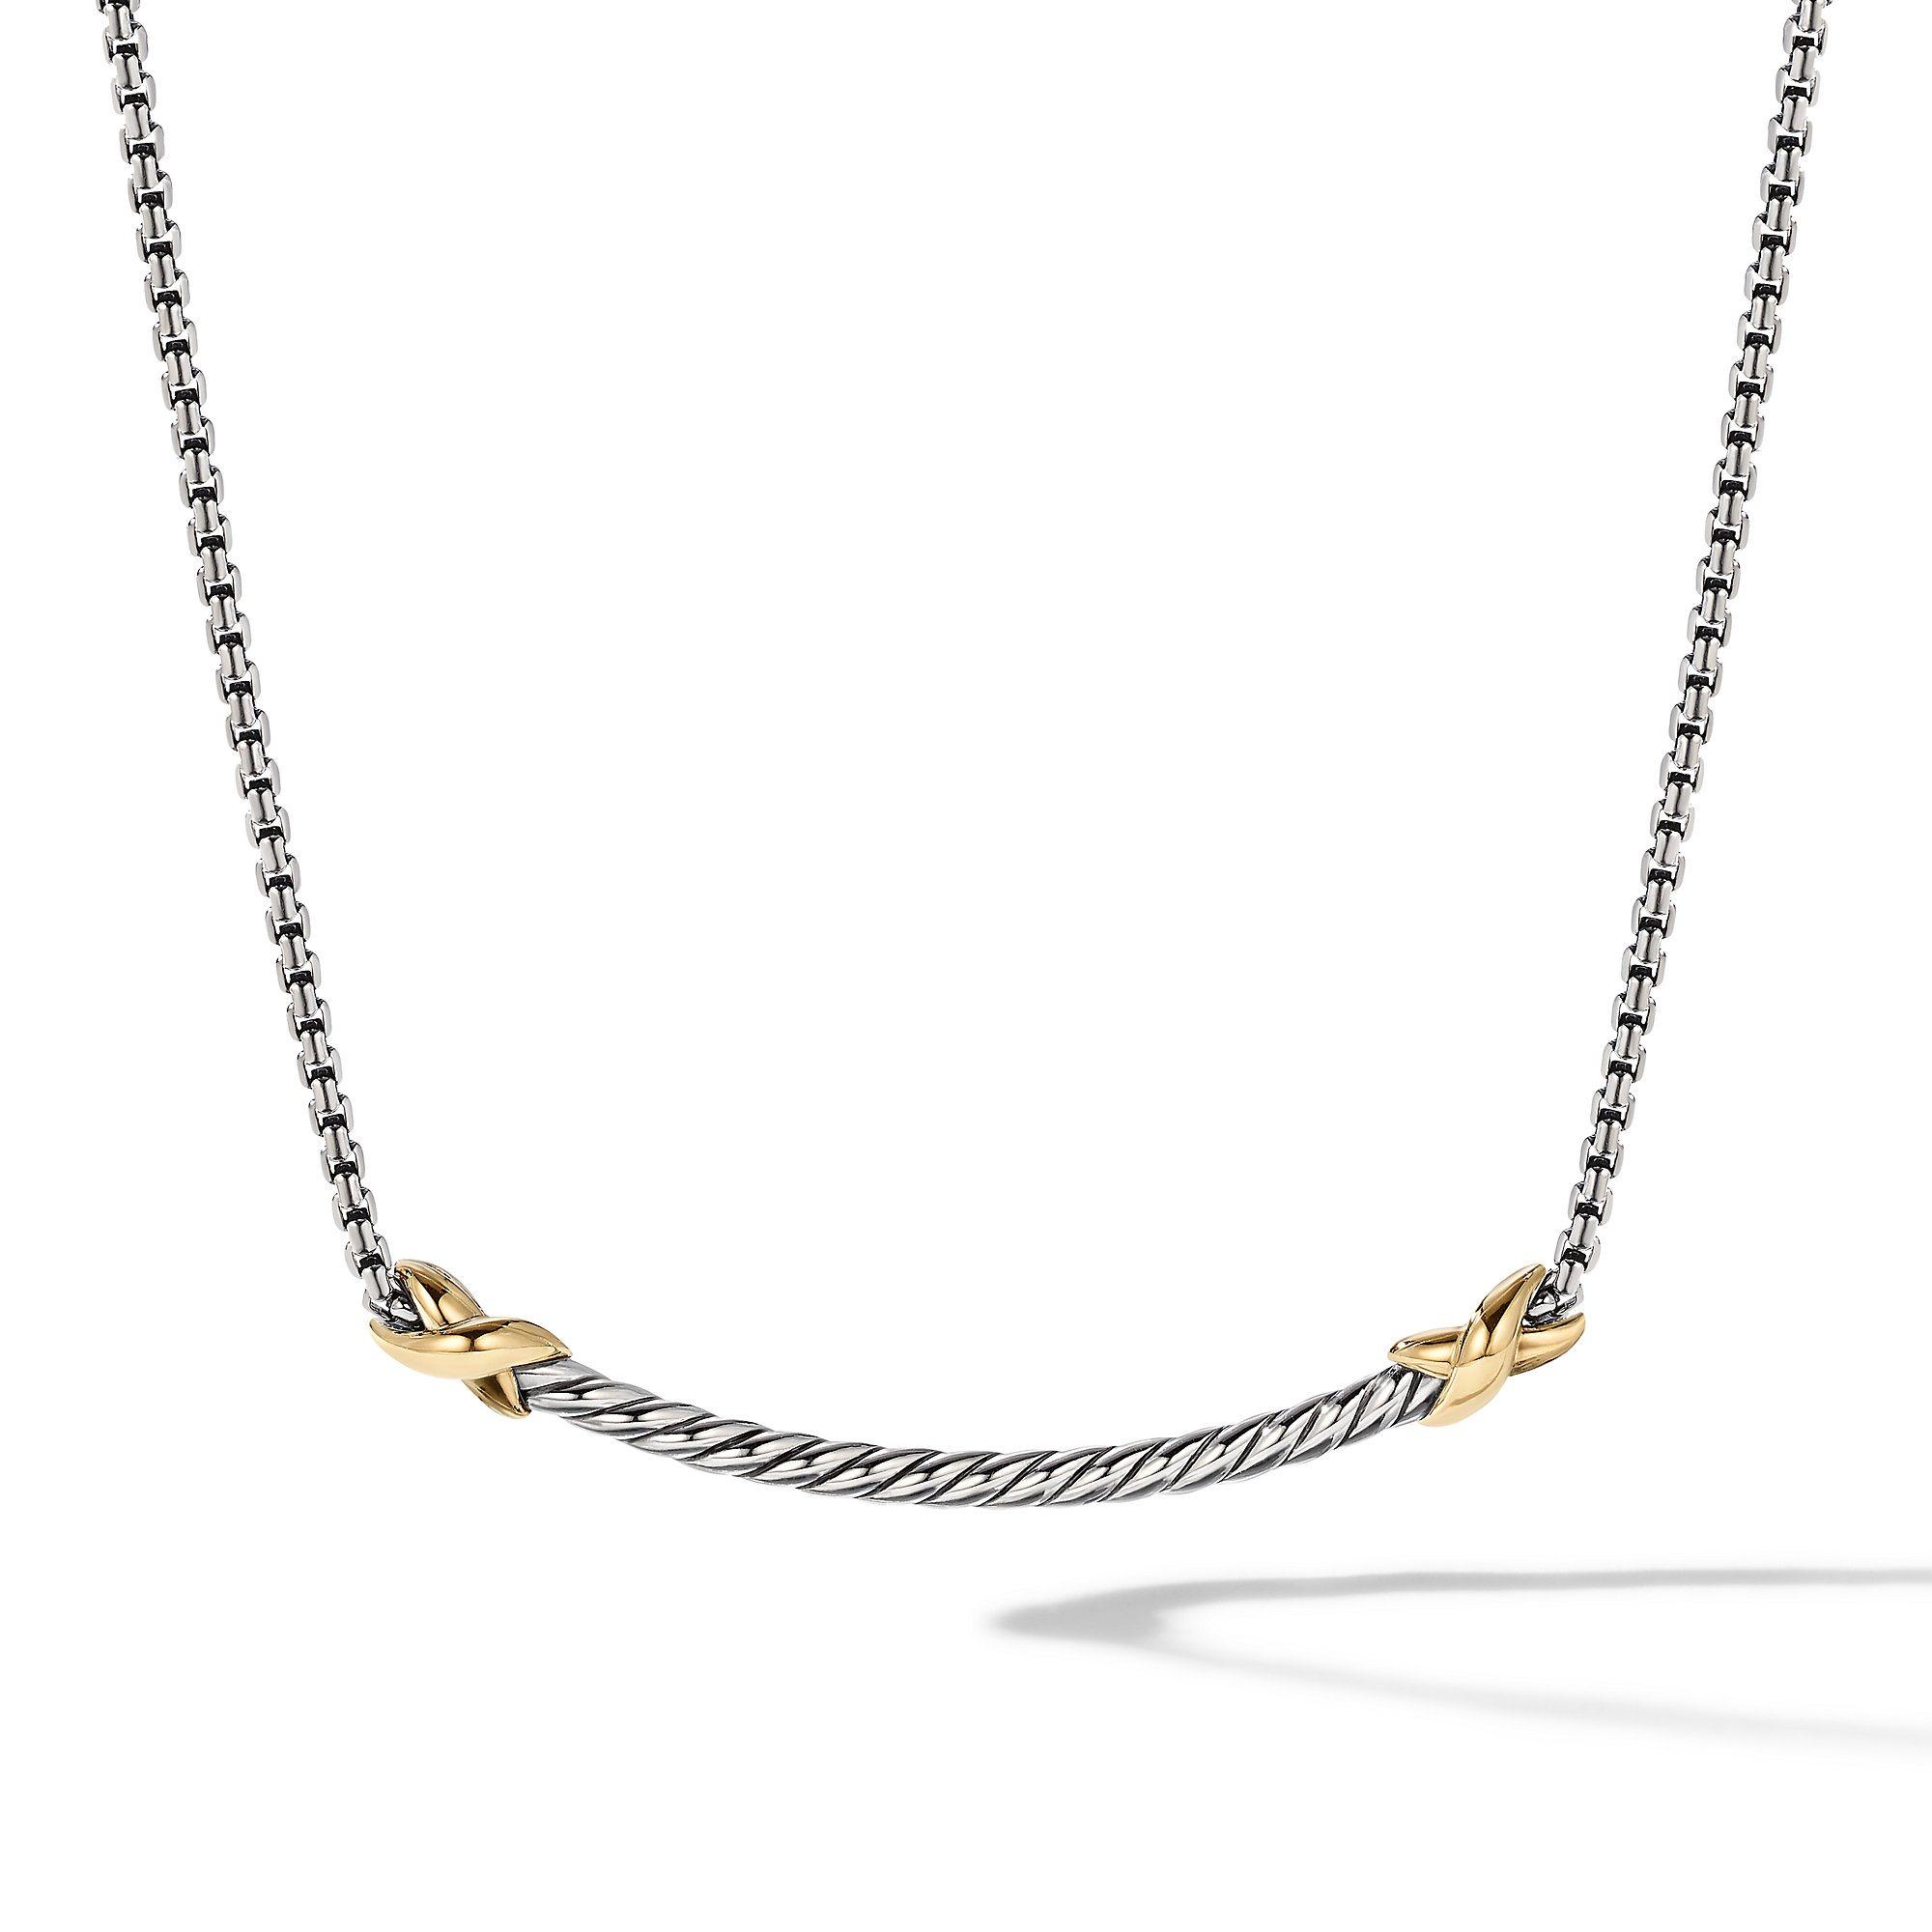 David Yurman Petite X Bar Necklace with 18k Yellow Gold